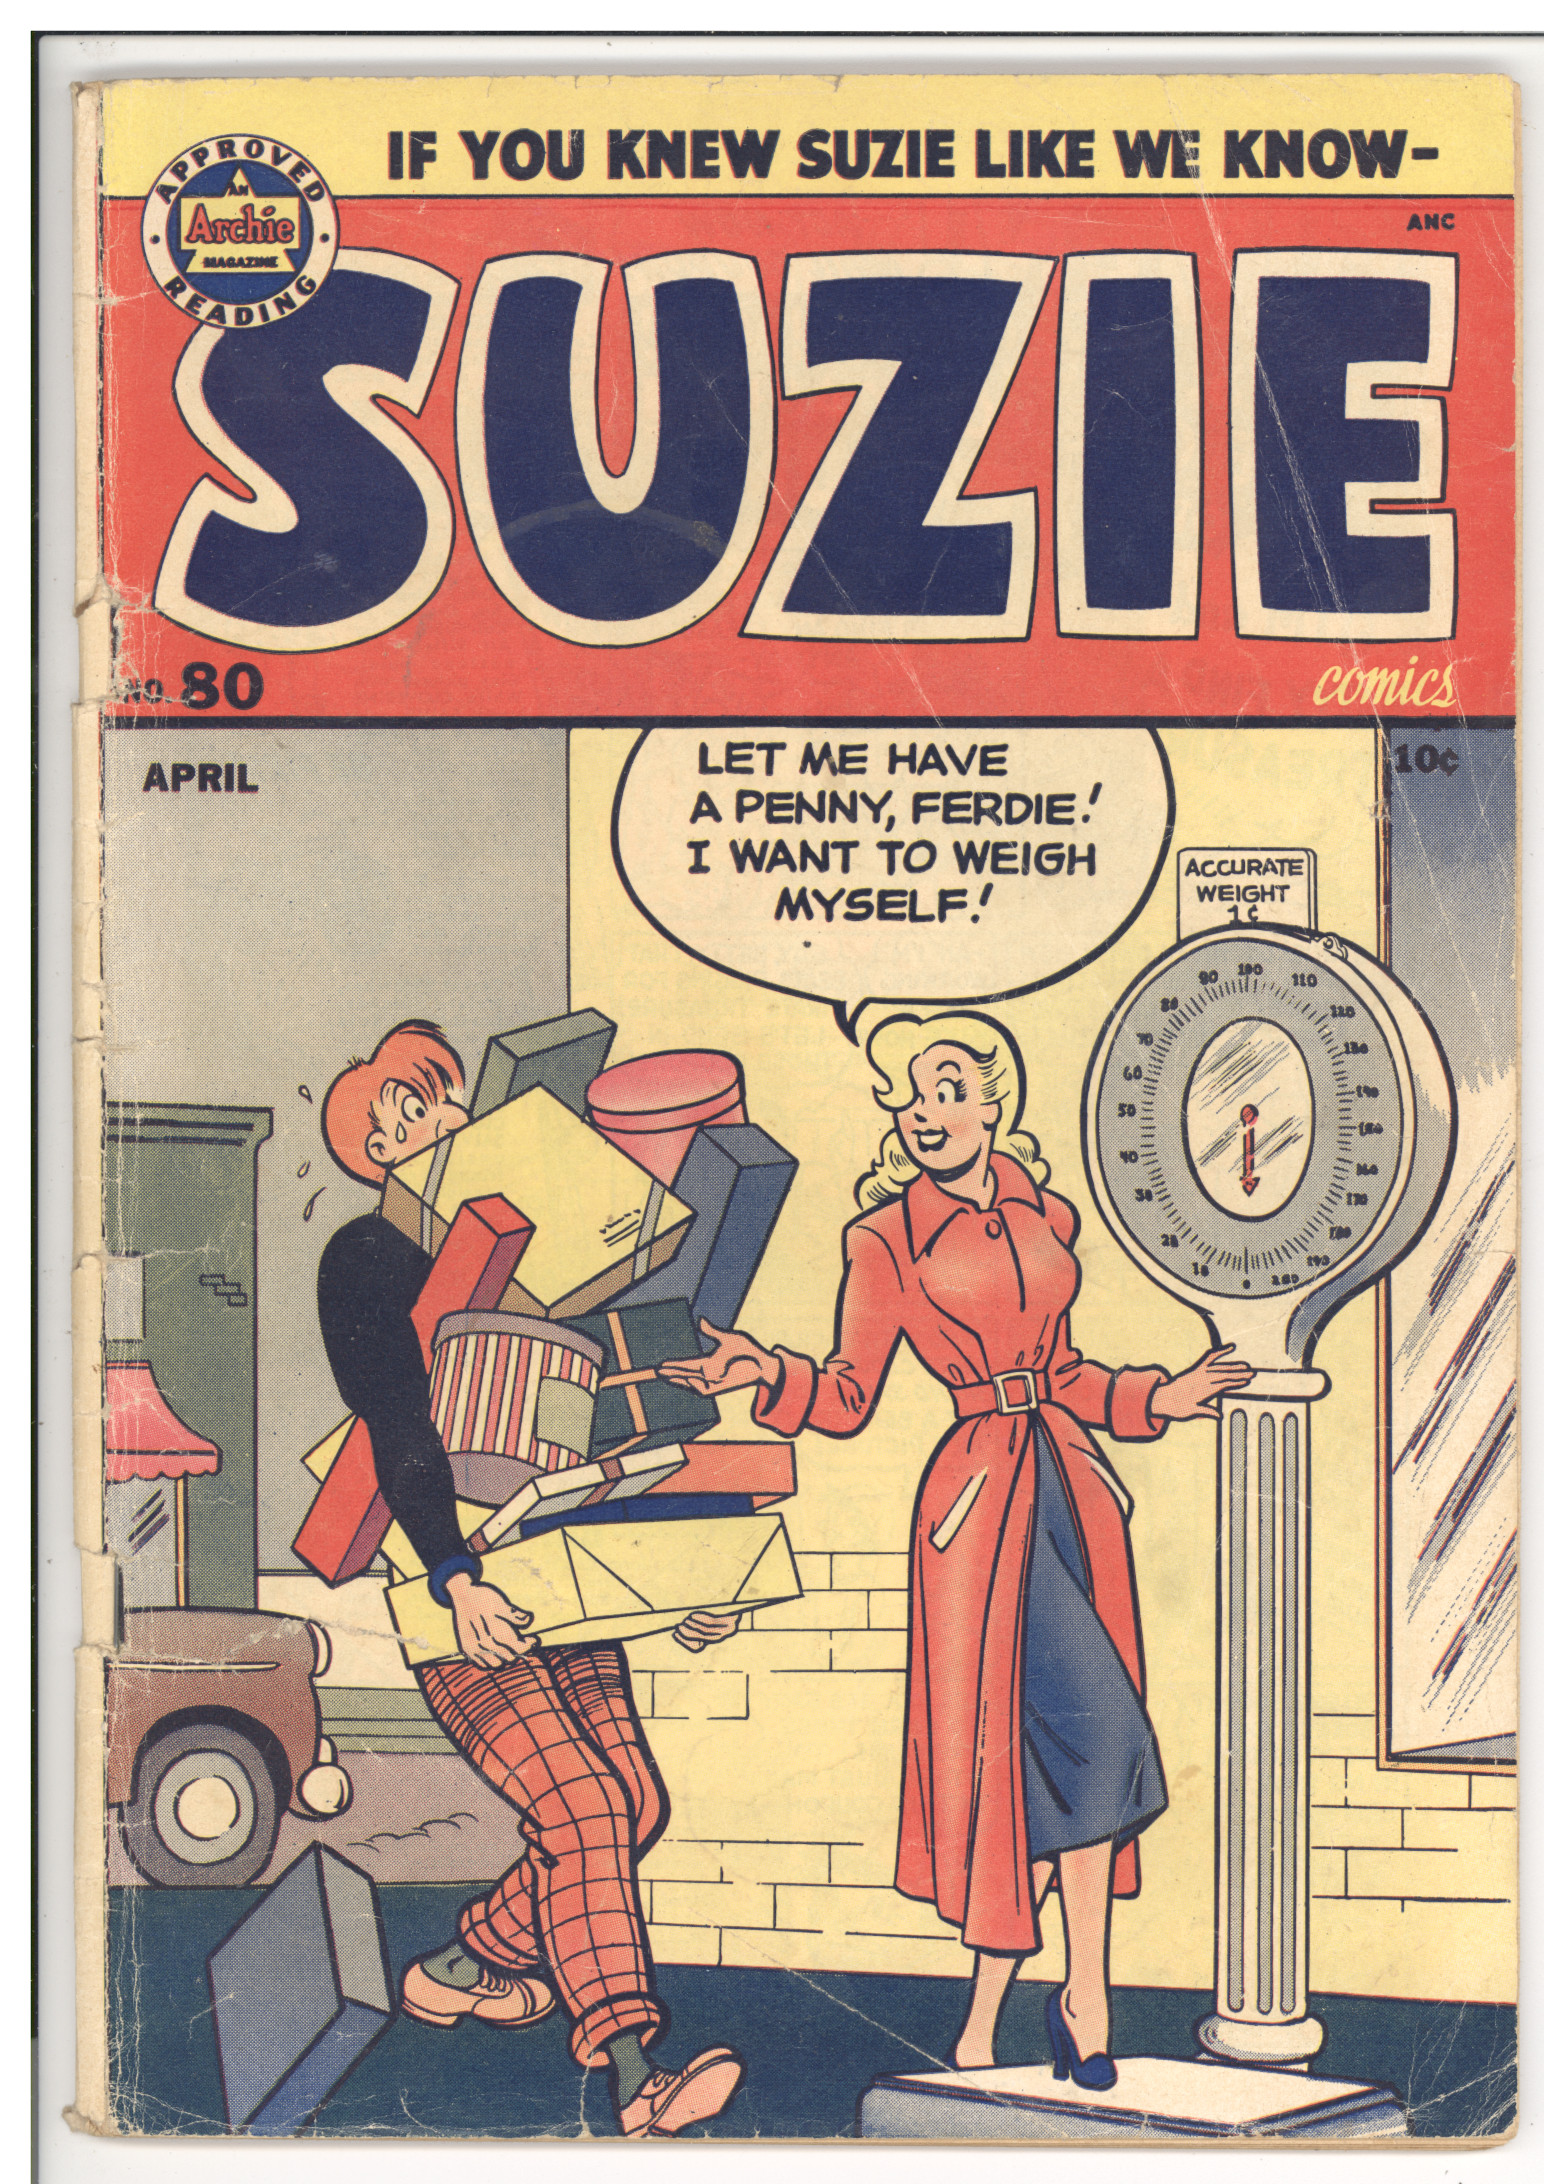 Suzie Comics #80 front